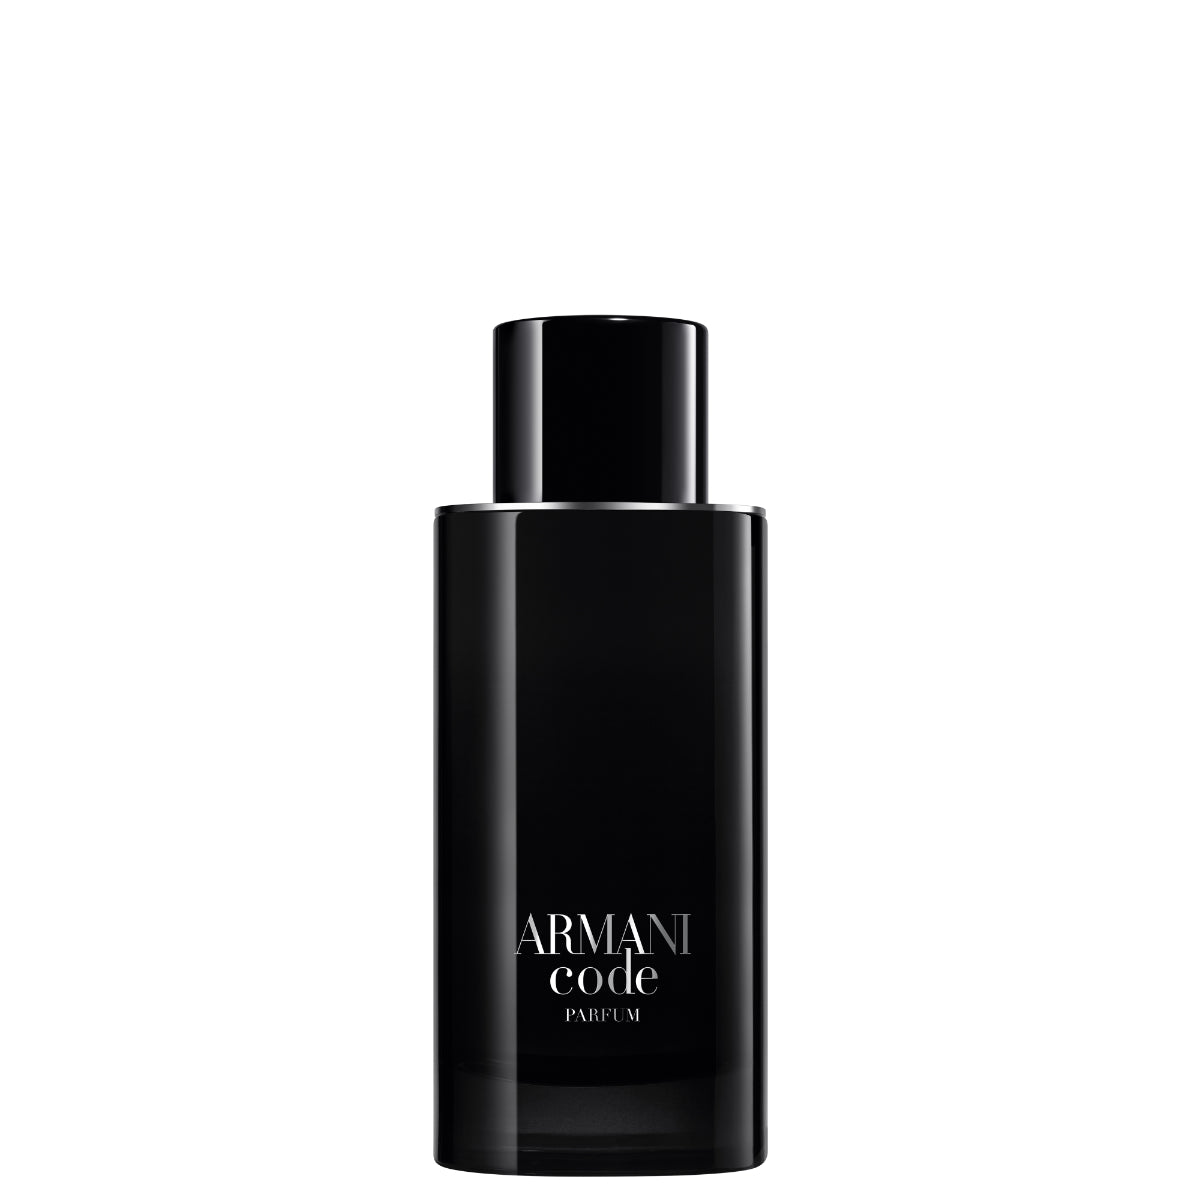 Armani Code Parfum By Giorgio Armani For Men 2.5 oz EDP Spray